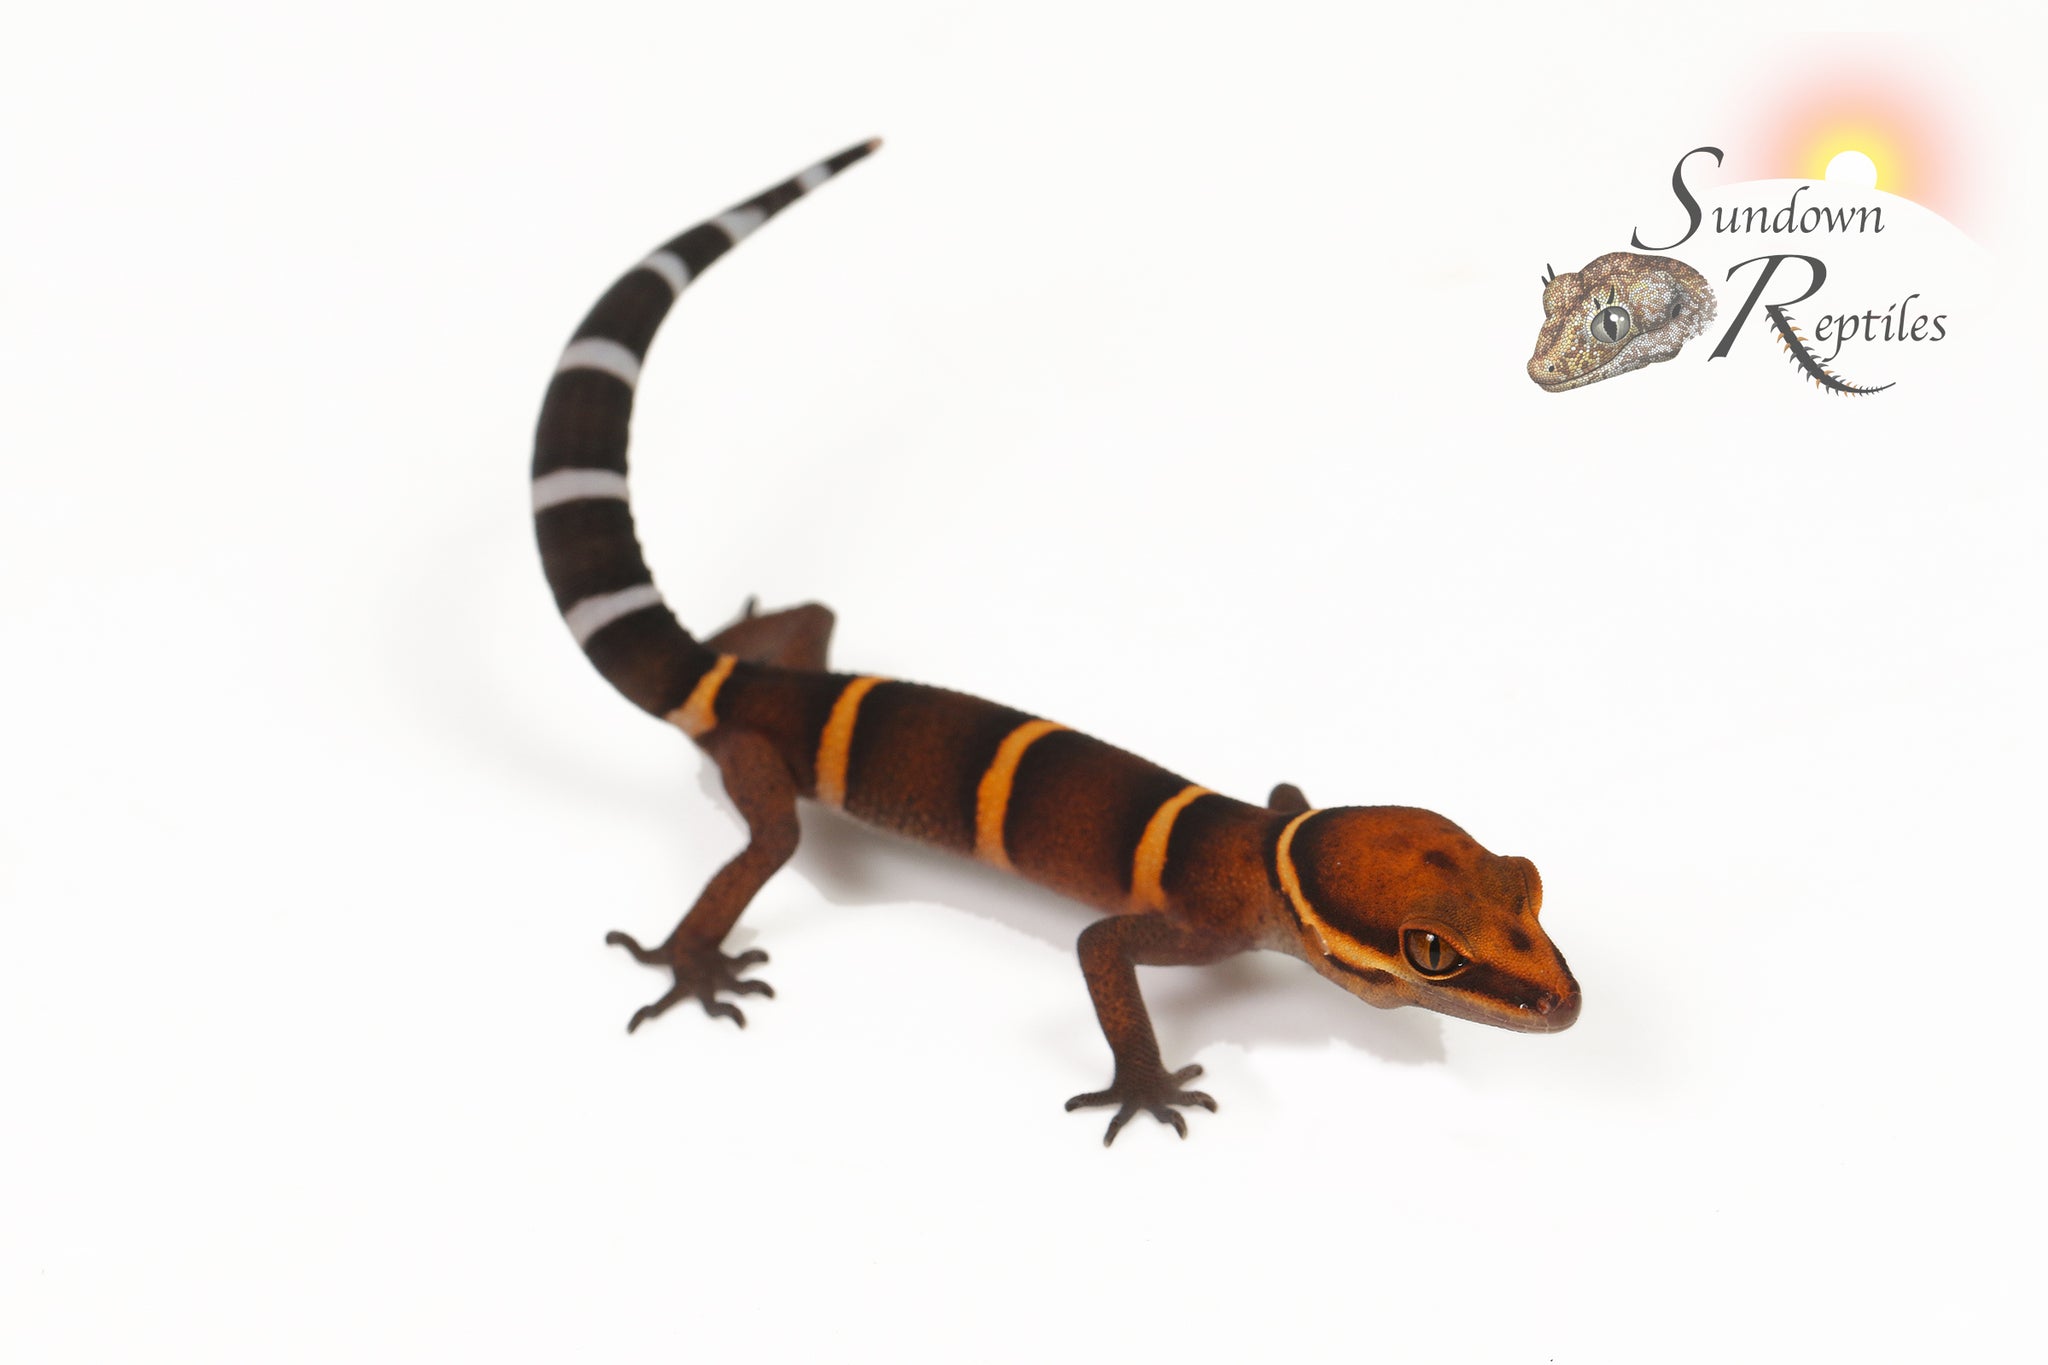 Unsexed Chinese Cave Gecko (Goniurosaurus bawanglingensis)